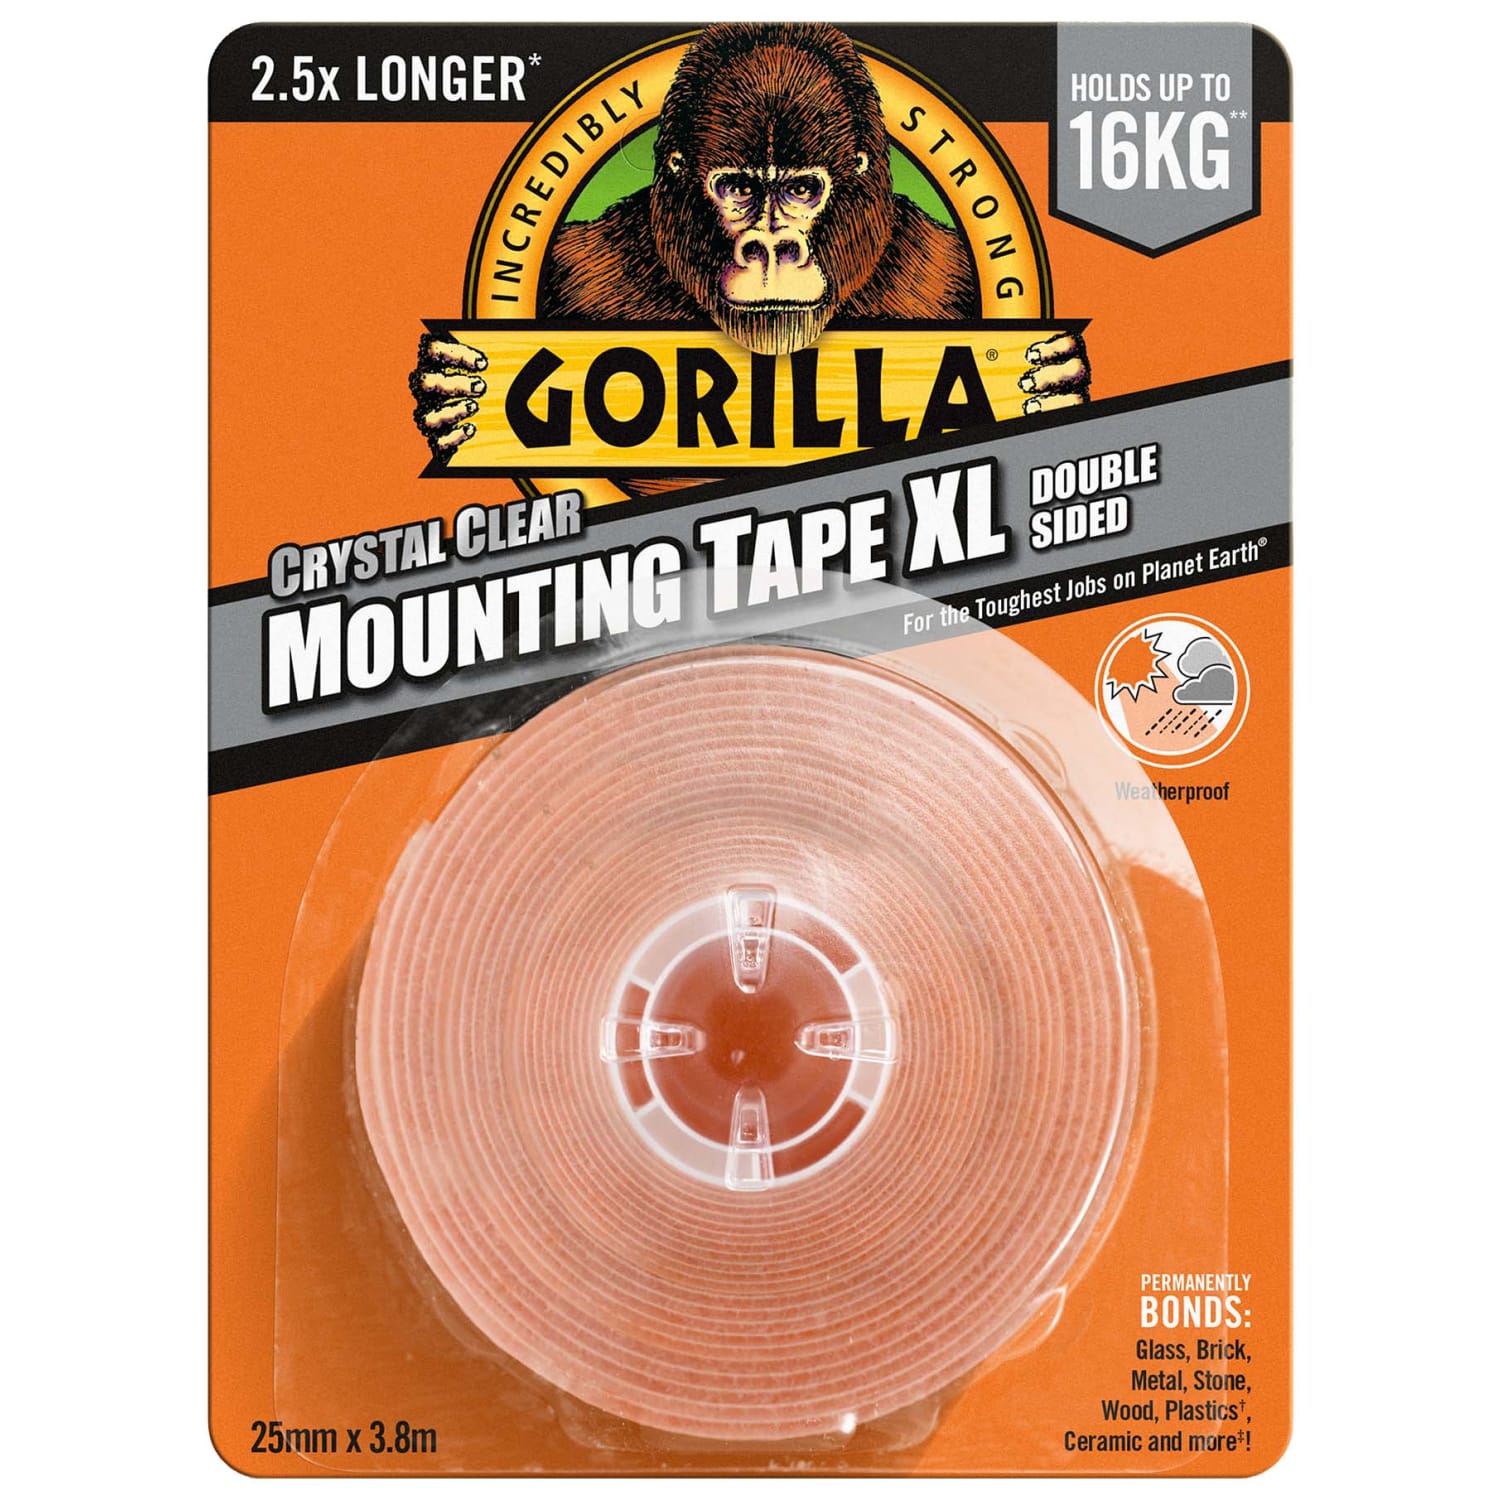 Buy Gorilla Tape Double Sided online